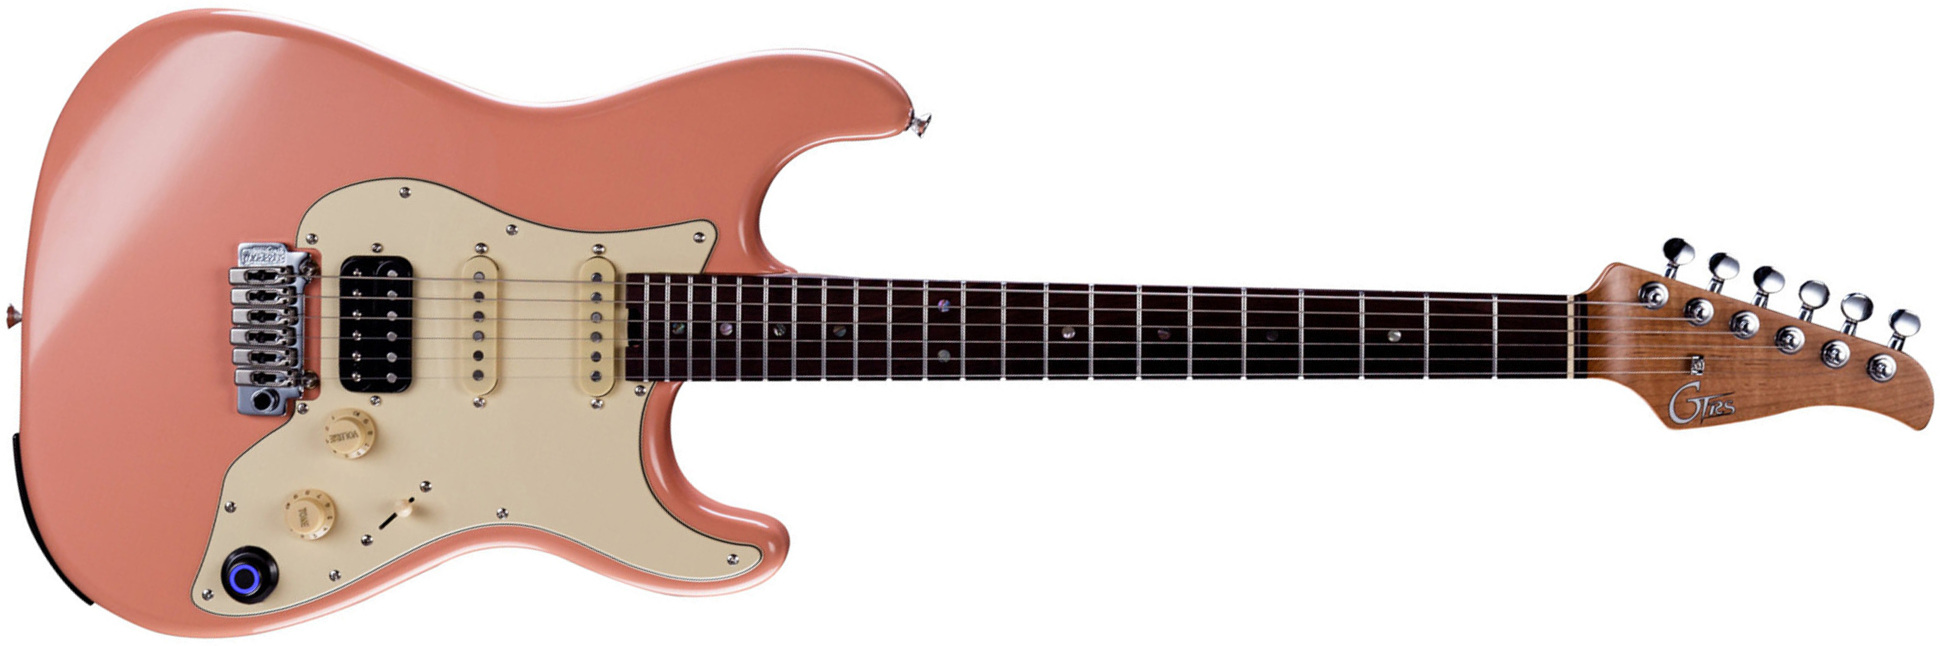 Mooer Gtrs P800 Pro Intelligent Guitar Hss Trem Rw - Flamingo Pink - Modeling guitar - Main picture